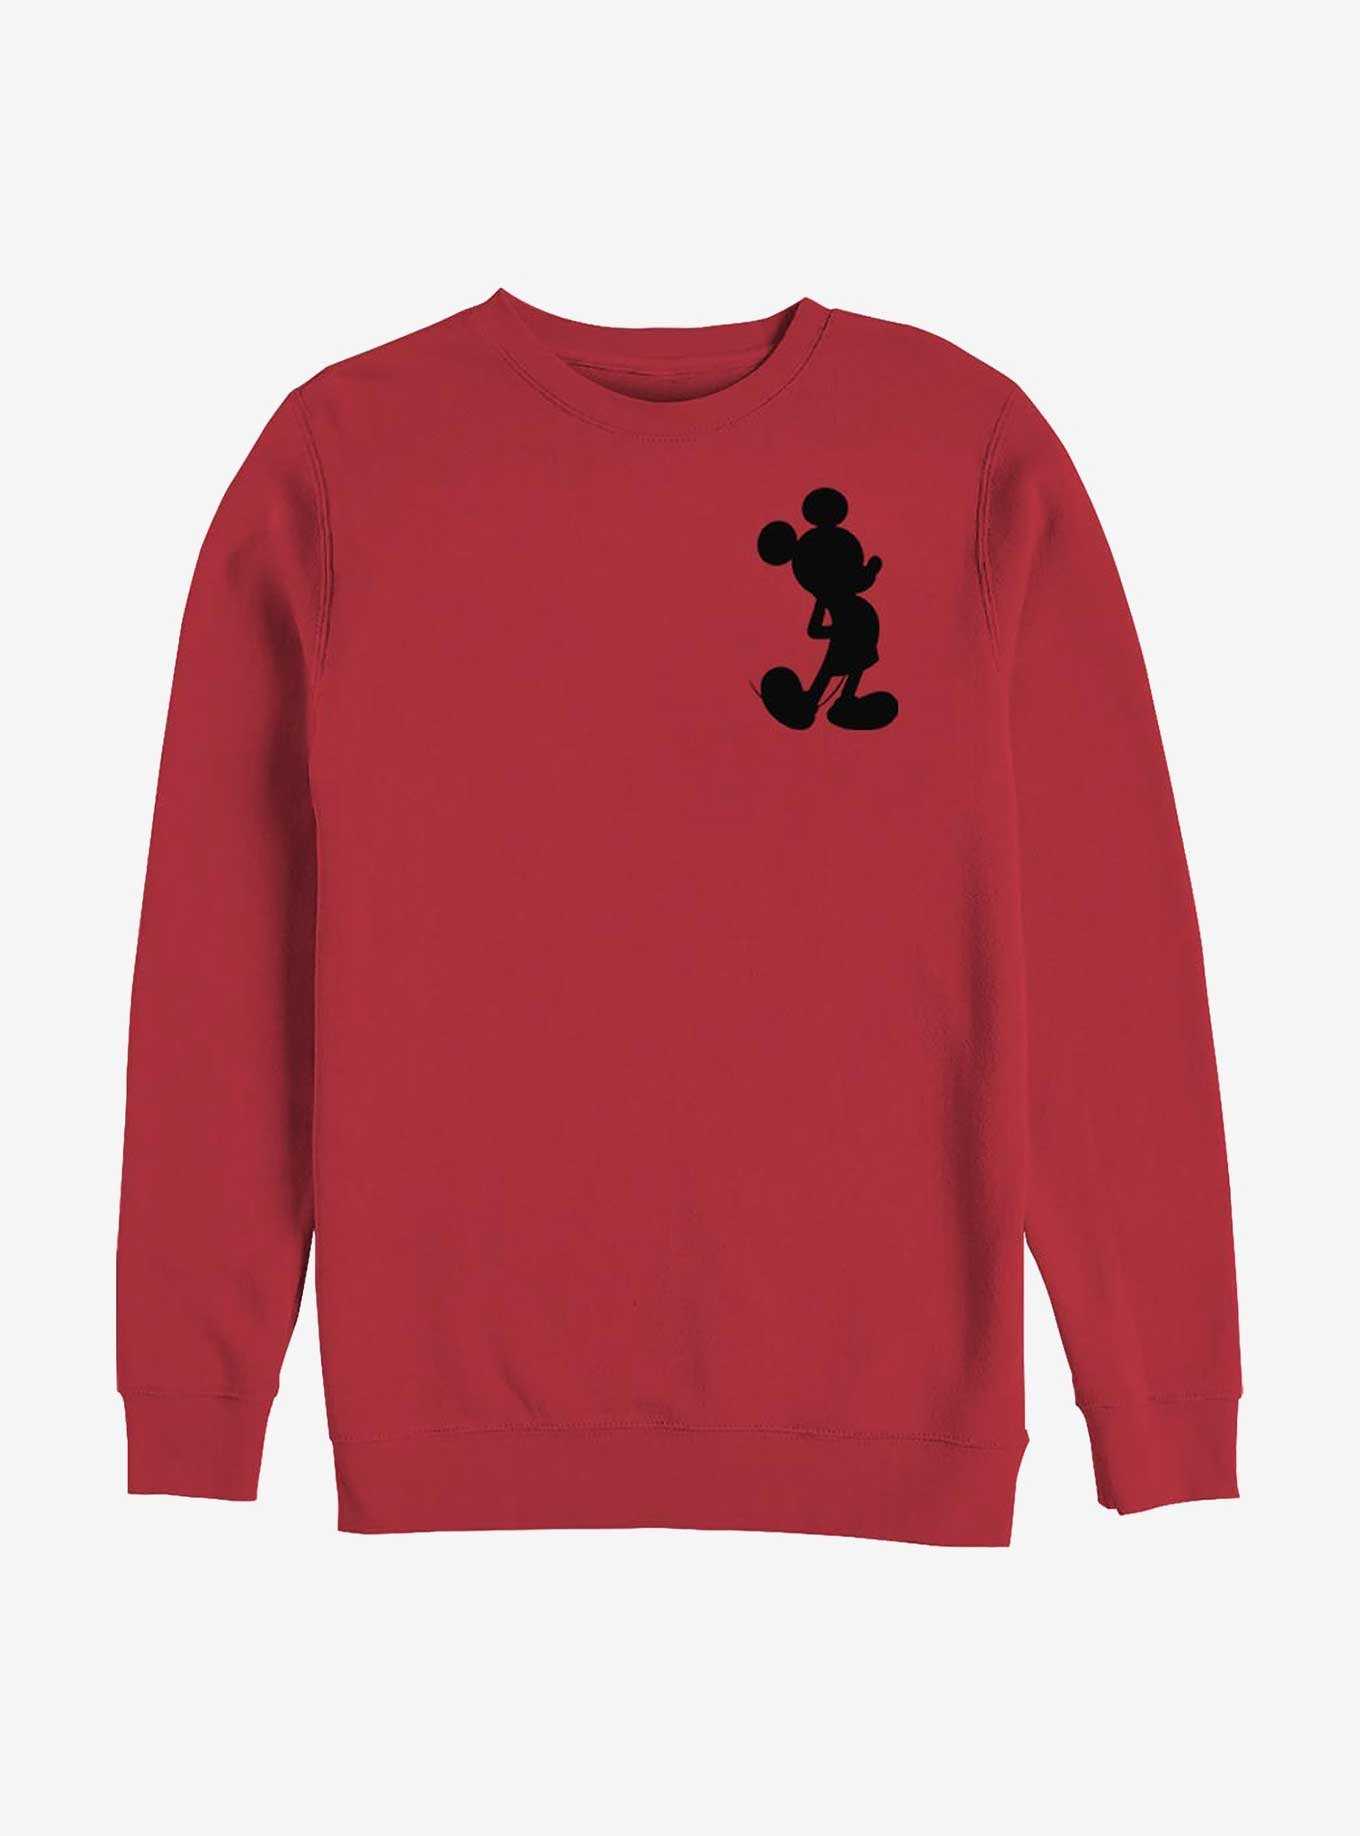 Disney Mickey Mouse Mickey Silhouette Crew Sweatshirt, , hi-res